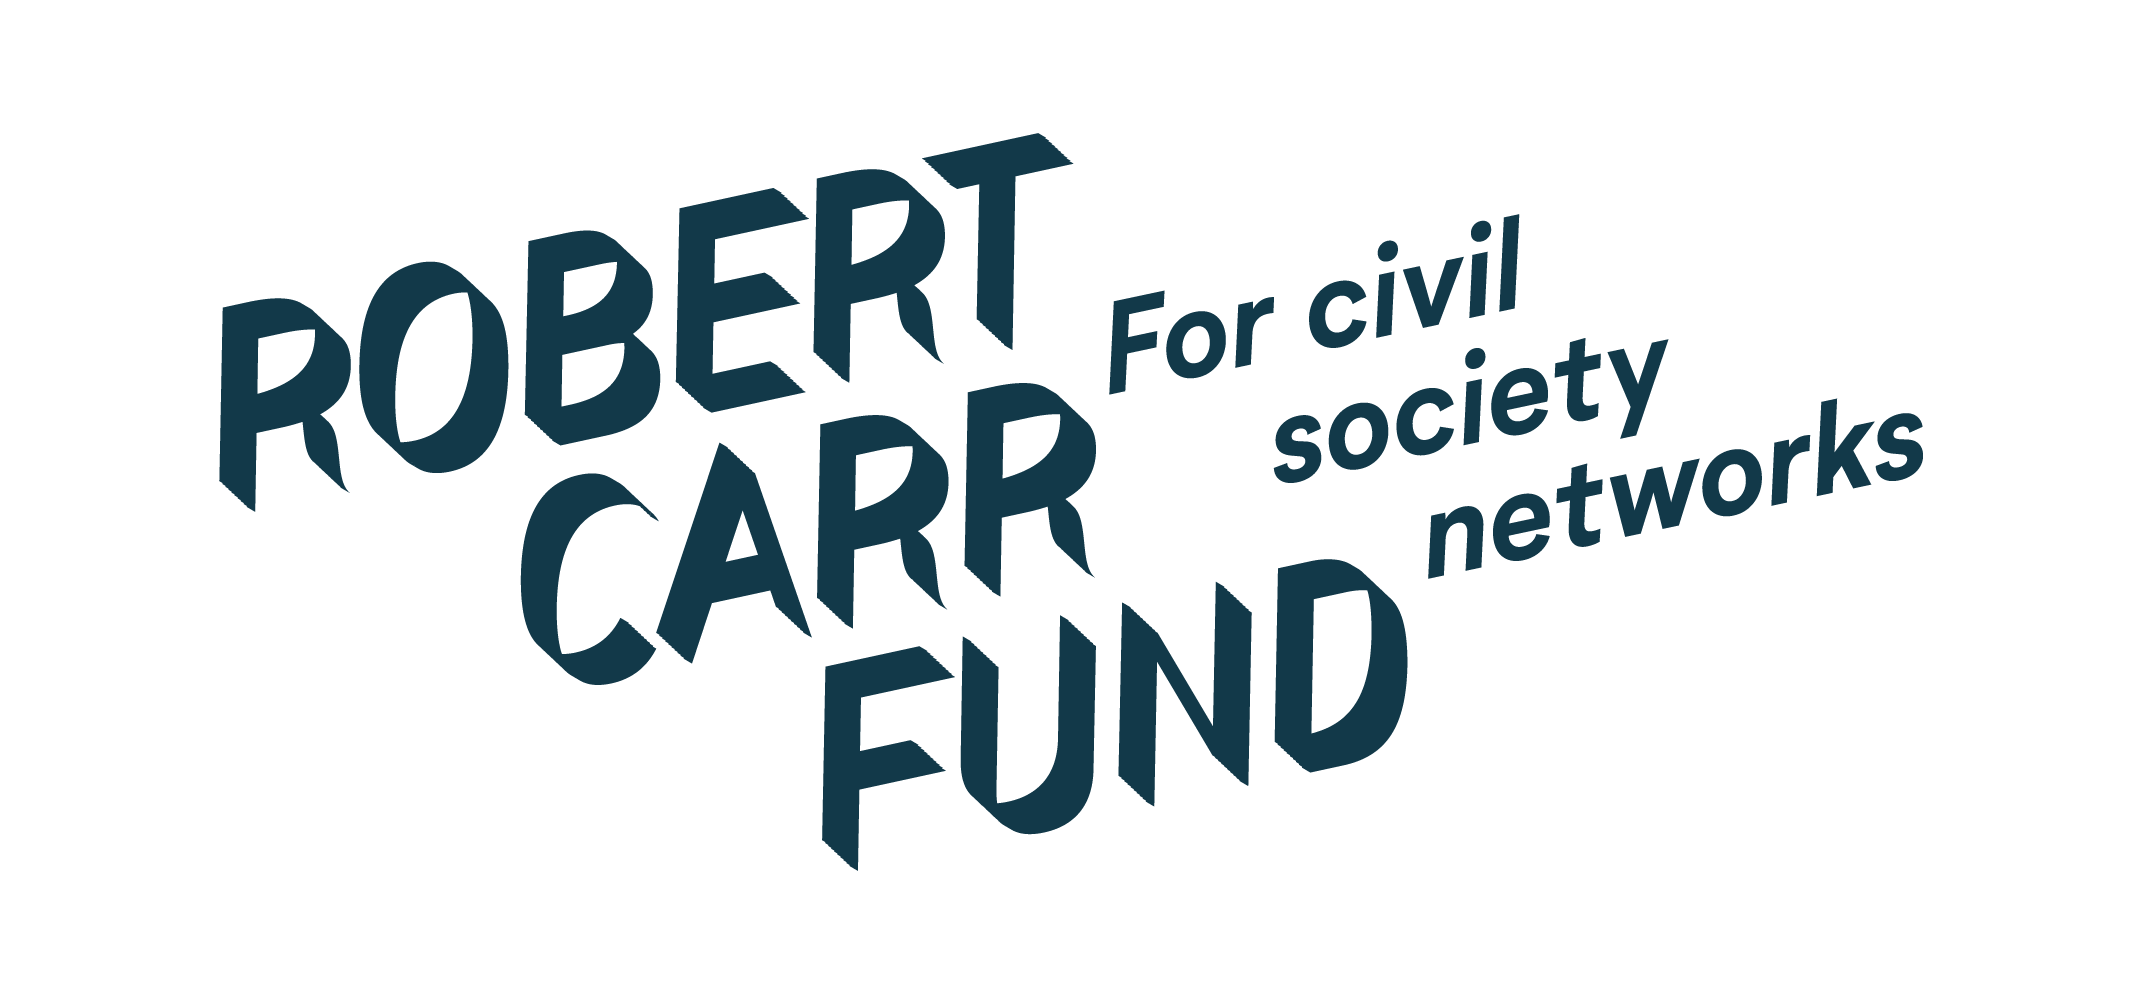 Robert Carr Fund - logo